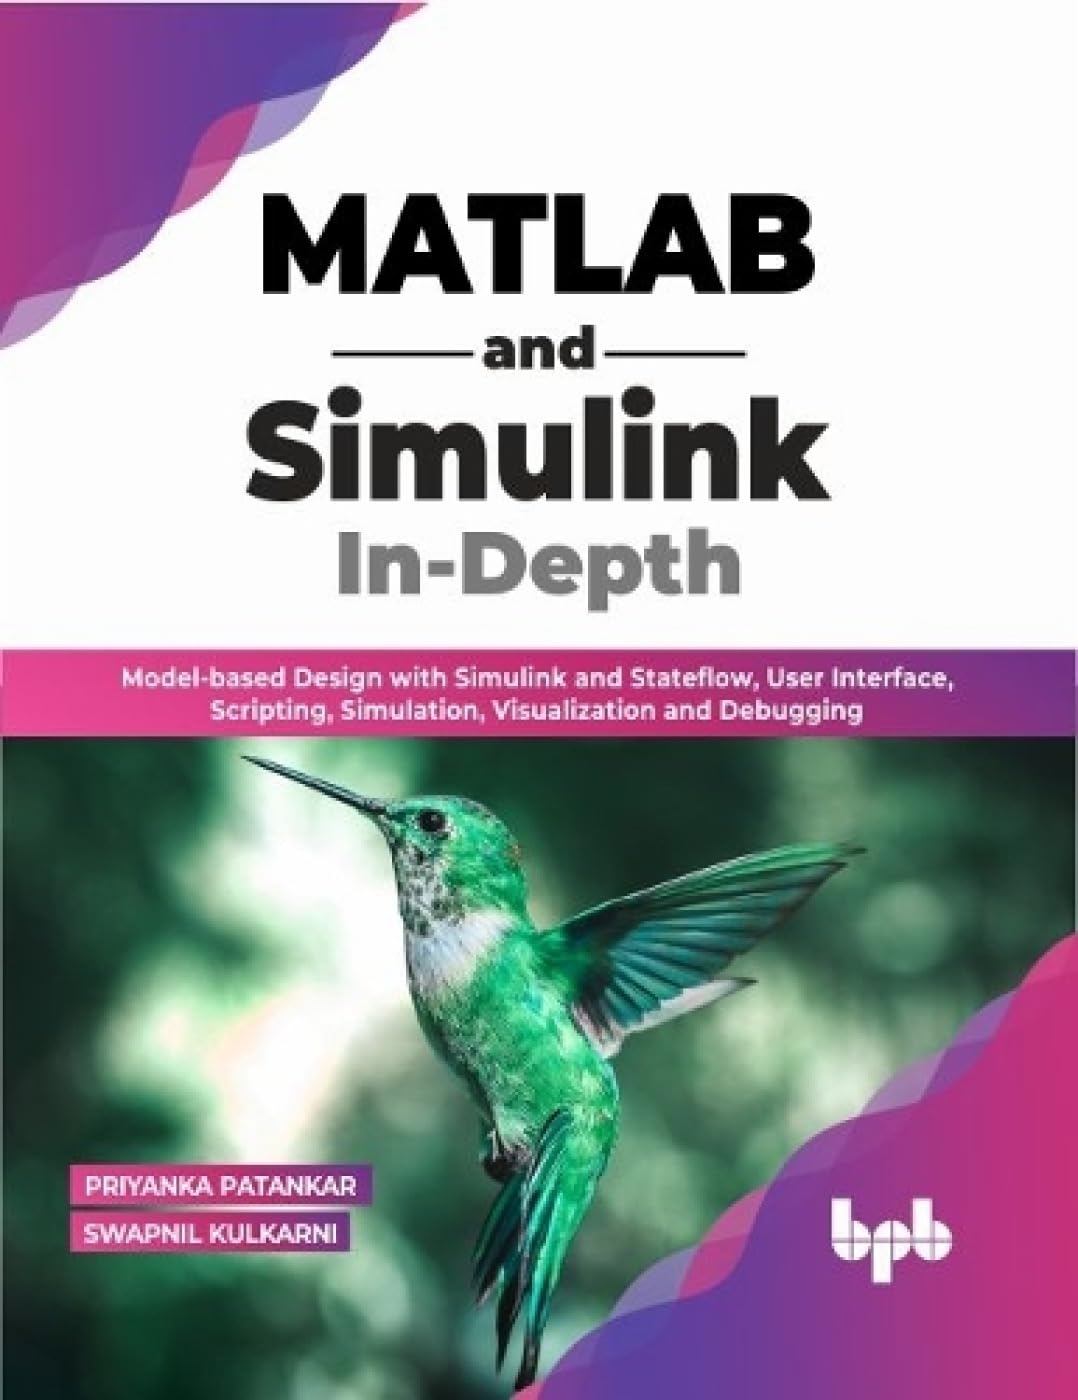 MATLAB and Simulink In-Depth: Model-based Design with Simulink and Stateflow, User Interface, Scripting, Simulation, Visualization and Debugging by Priyanka Patankar Swapnil Kulkarni 